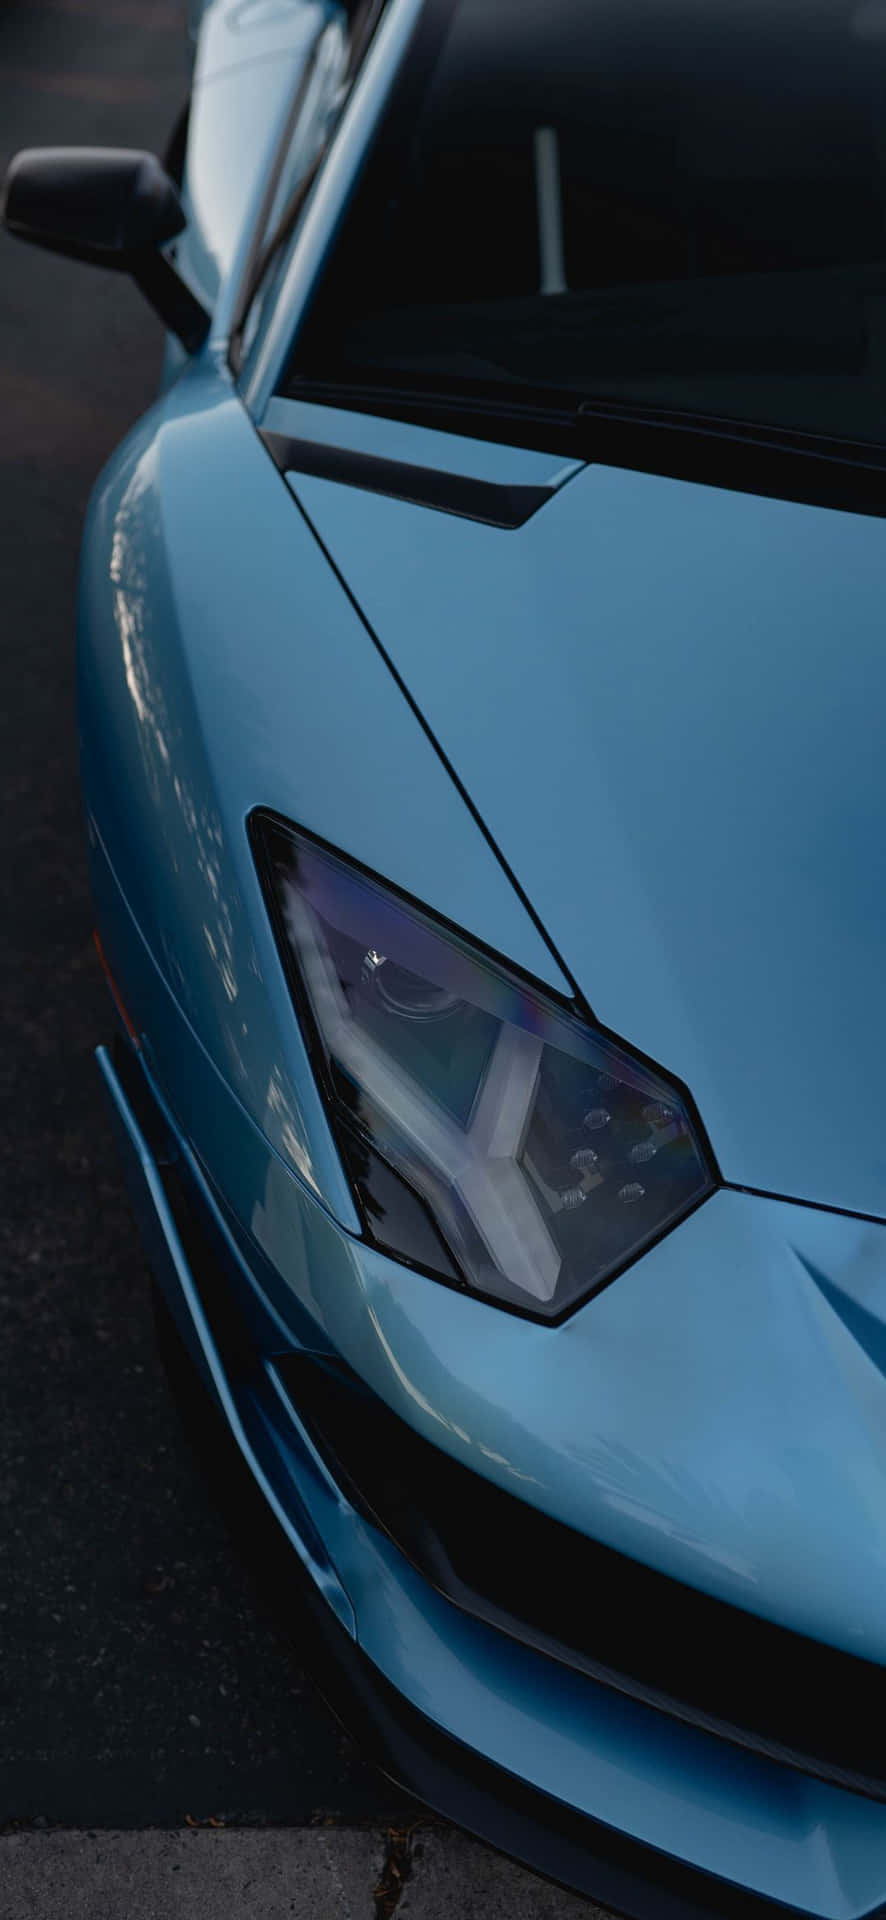 Hellerblauer Lamborghini Für Das Iphone. Wallpaper